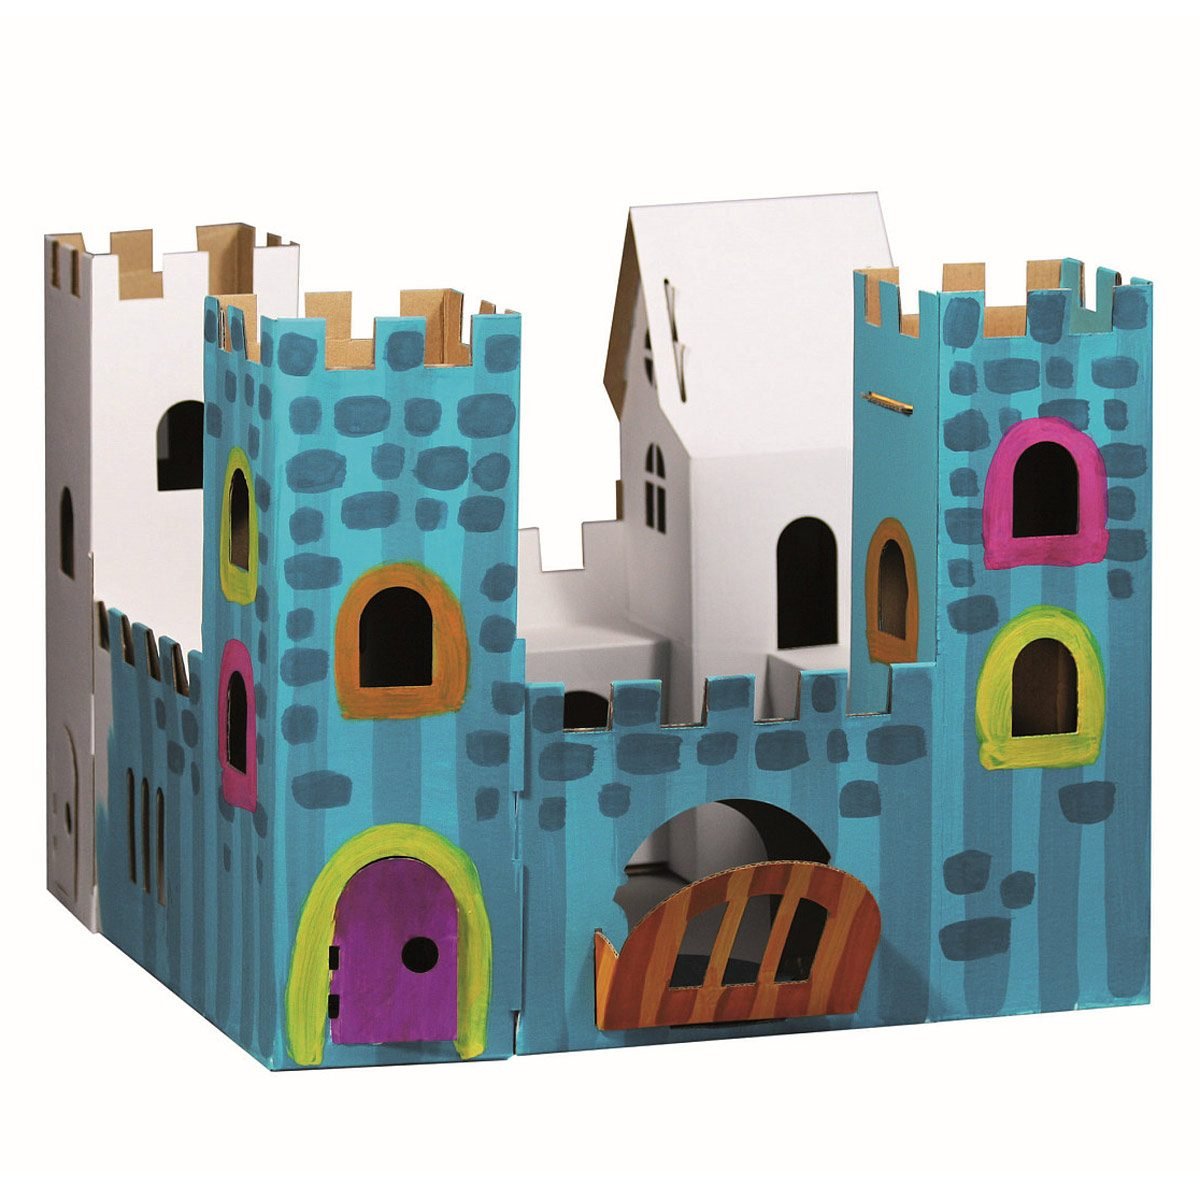 Creative DIY Cardboard Models for Kids